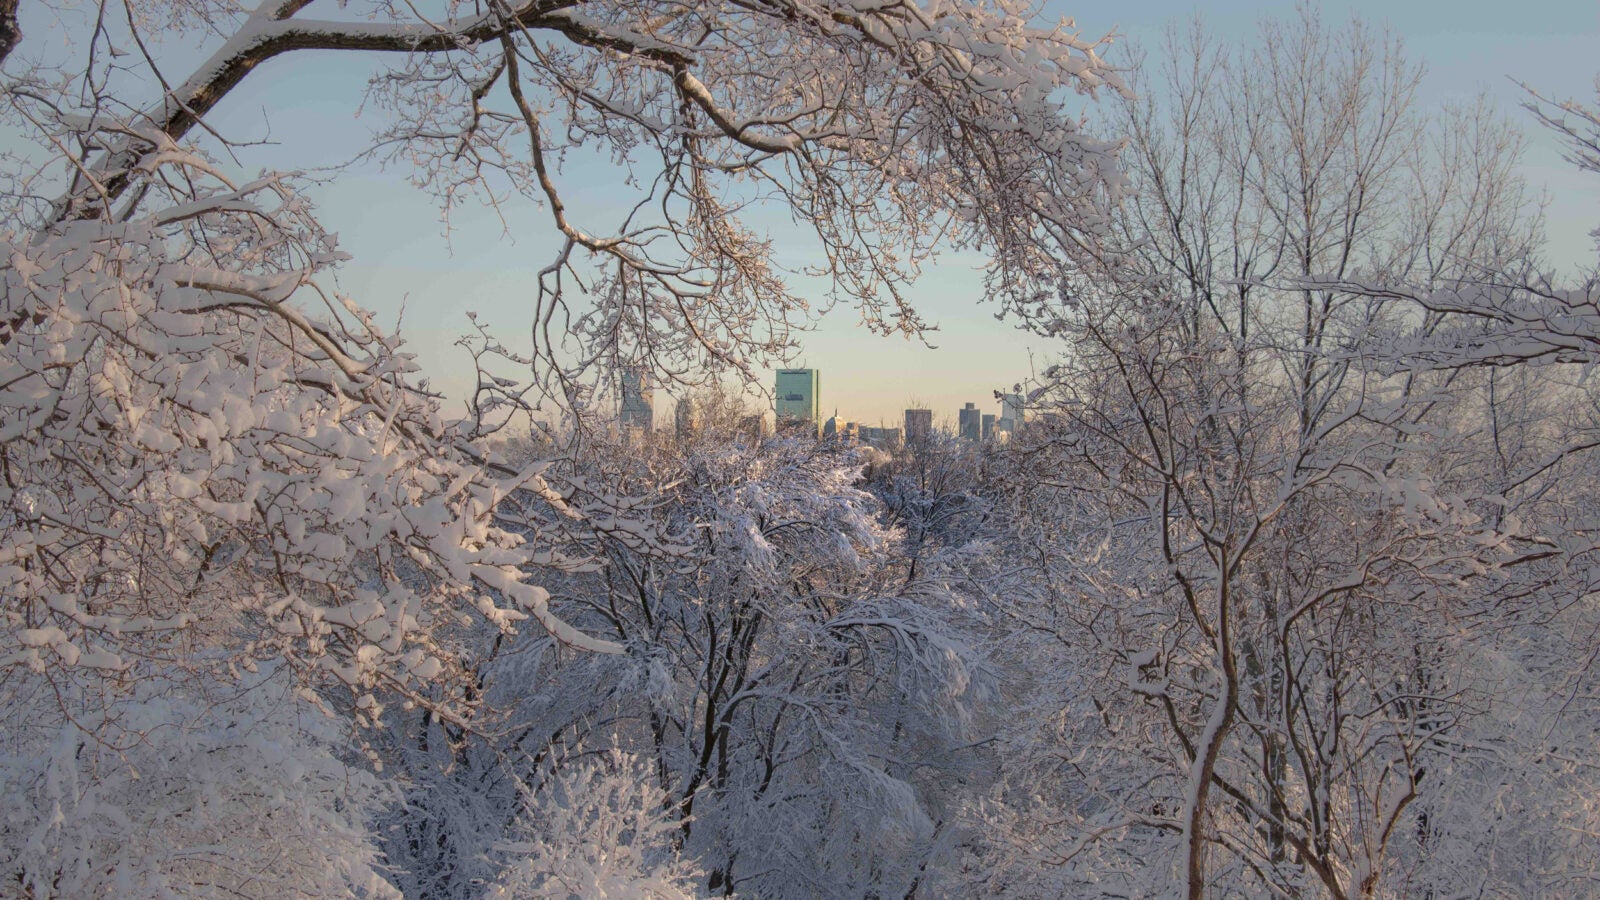 The city of Boston seen through snowy trees.